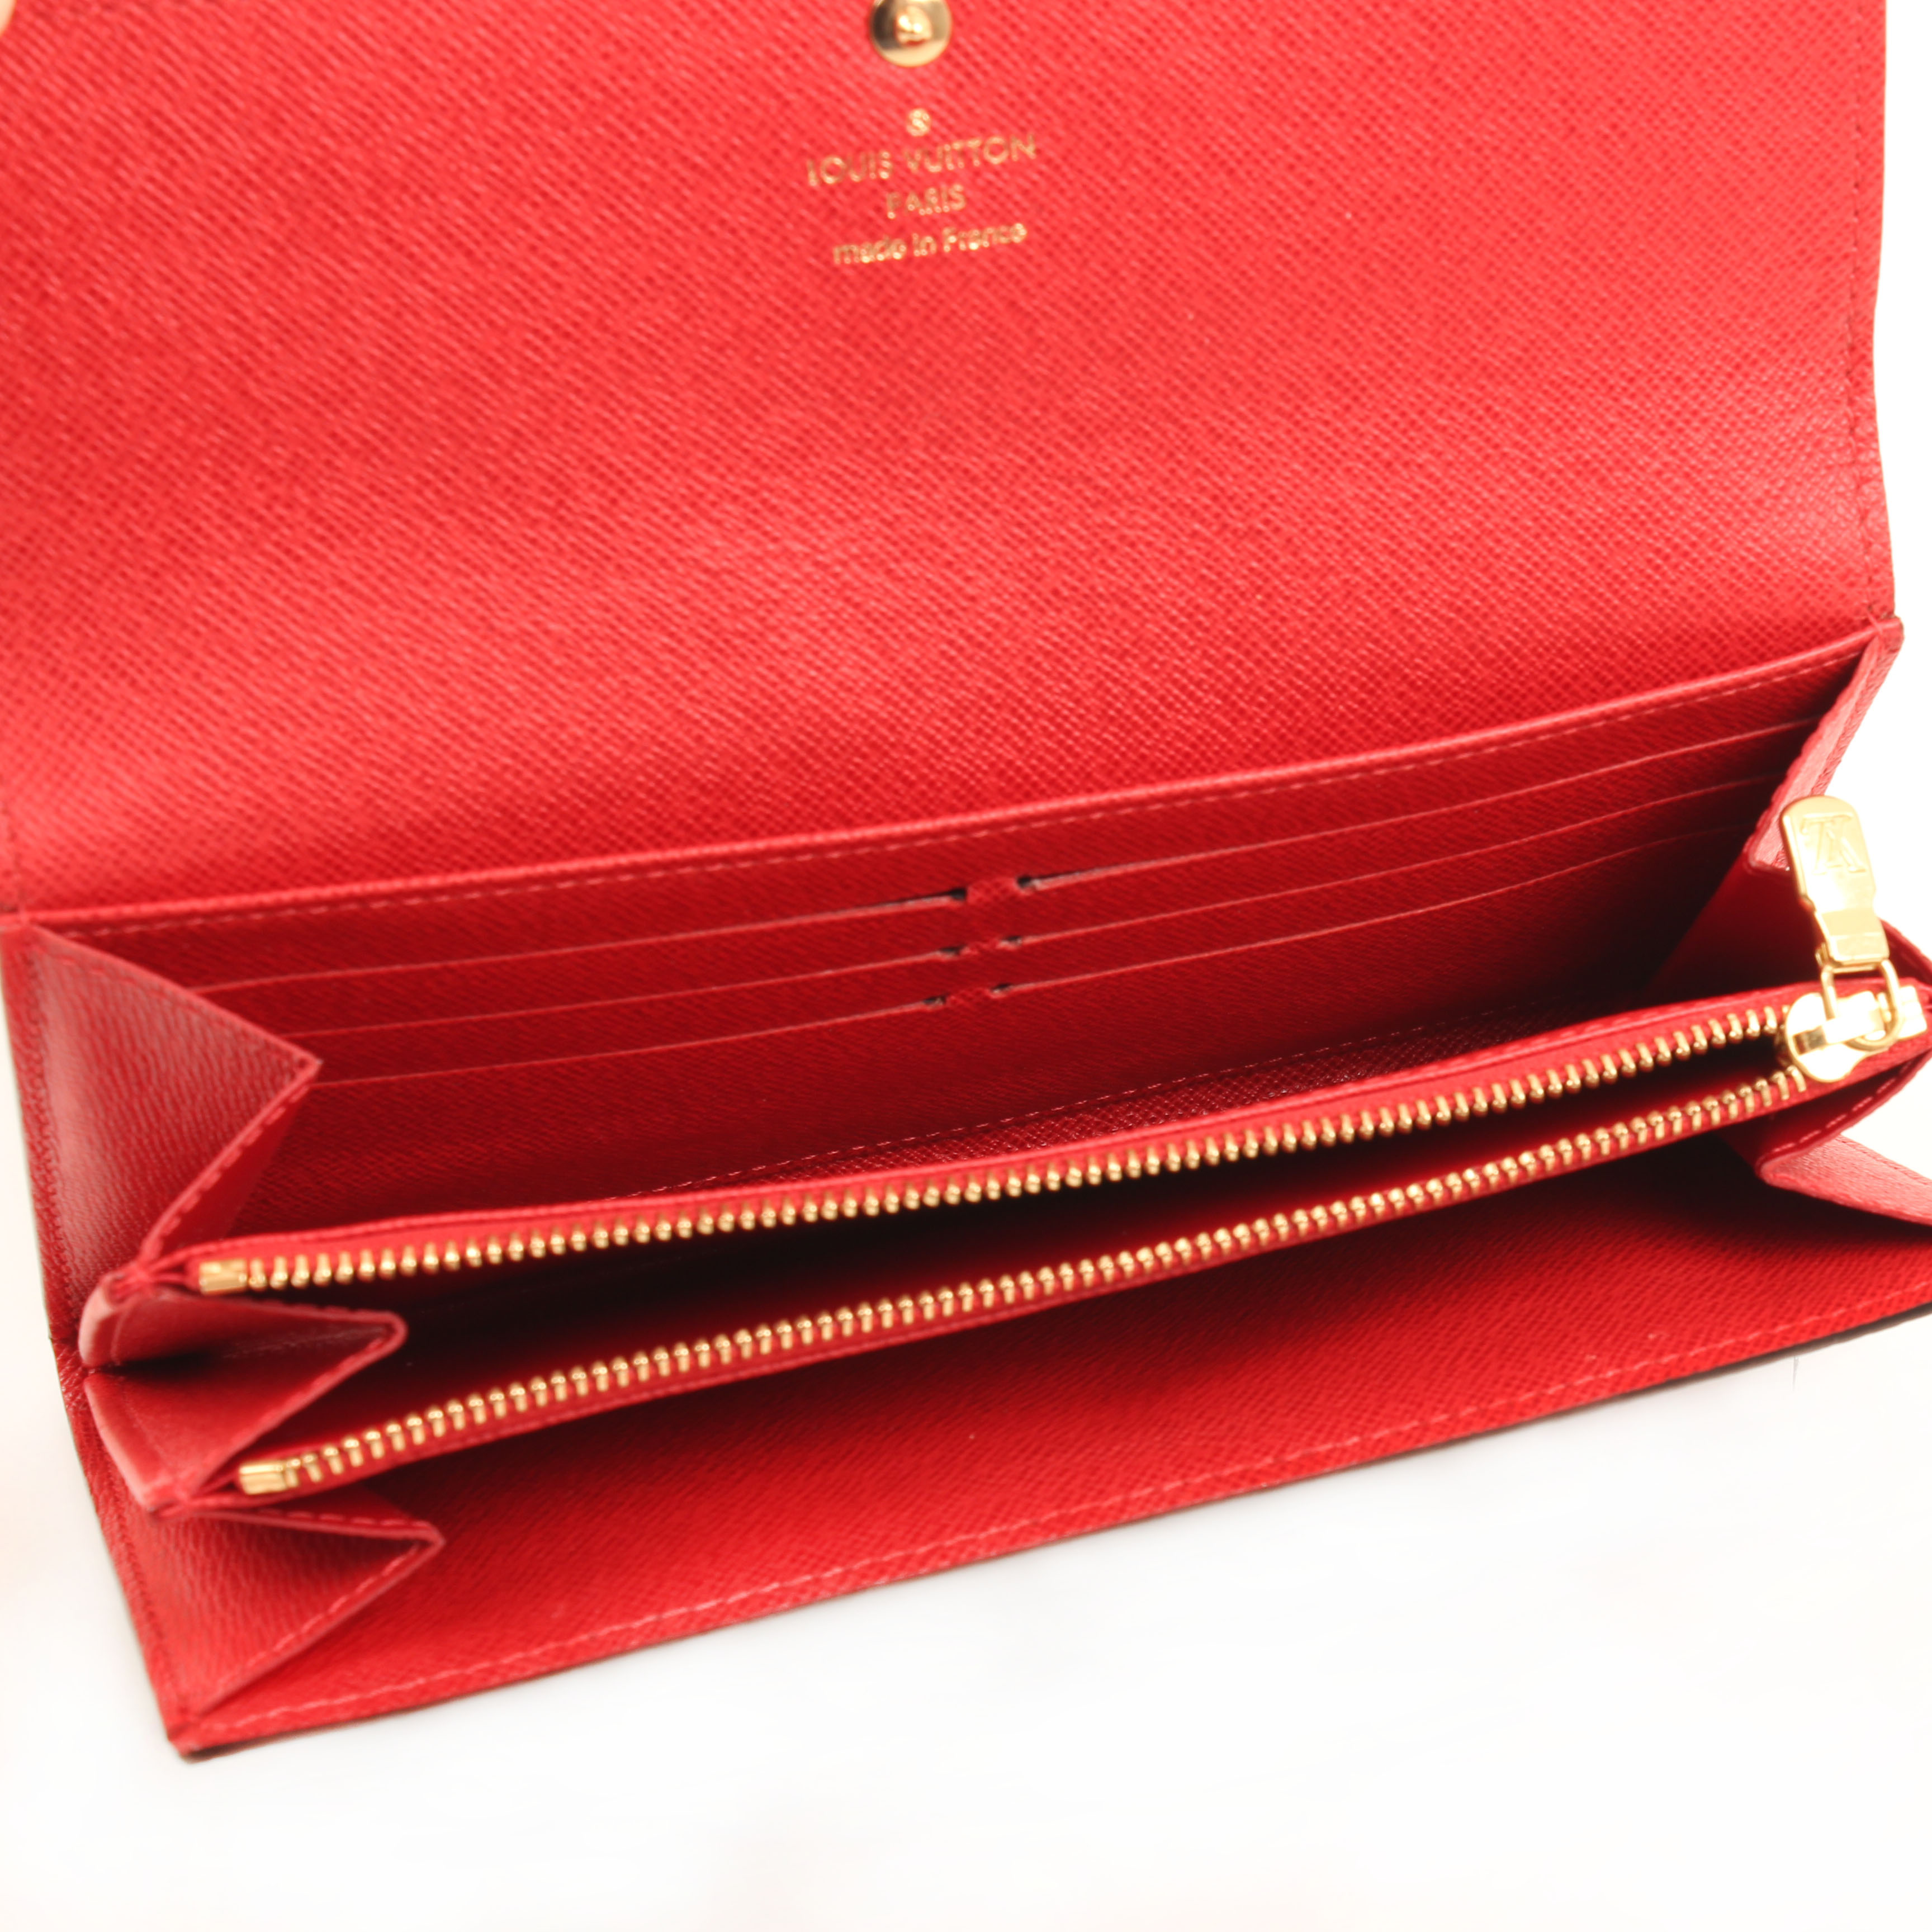 louis vuitton sarah groom wallet limited edition monogram interior